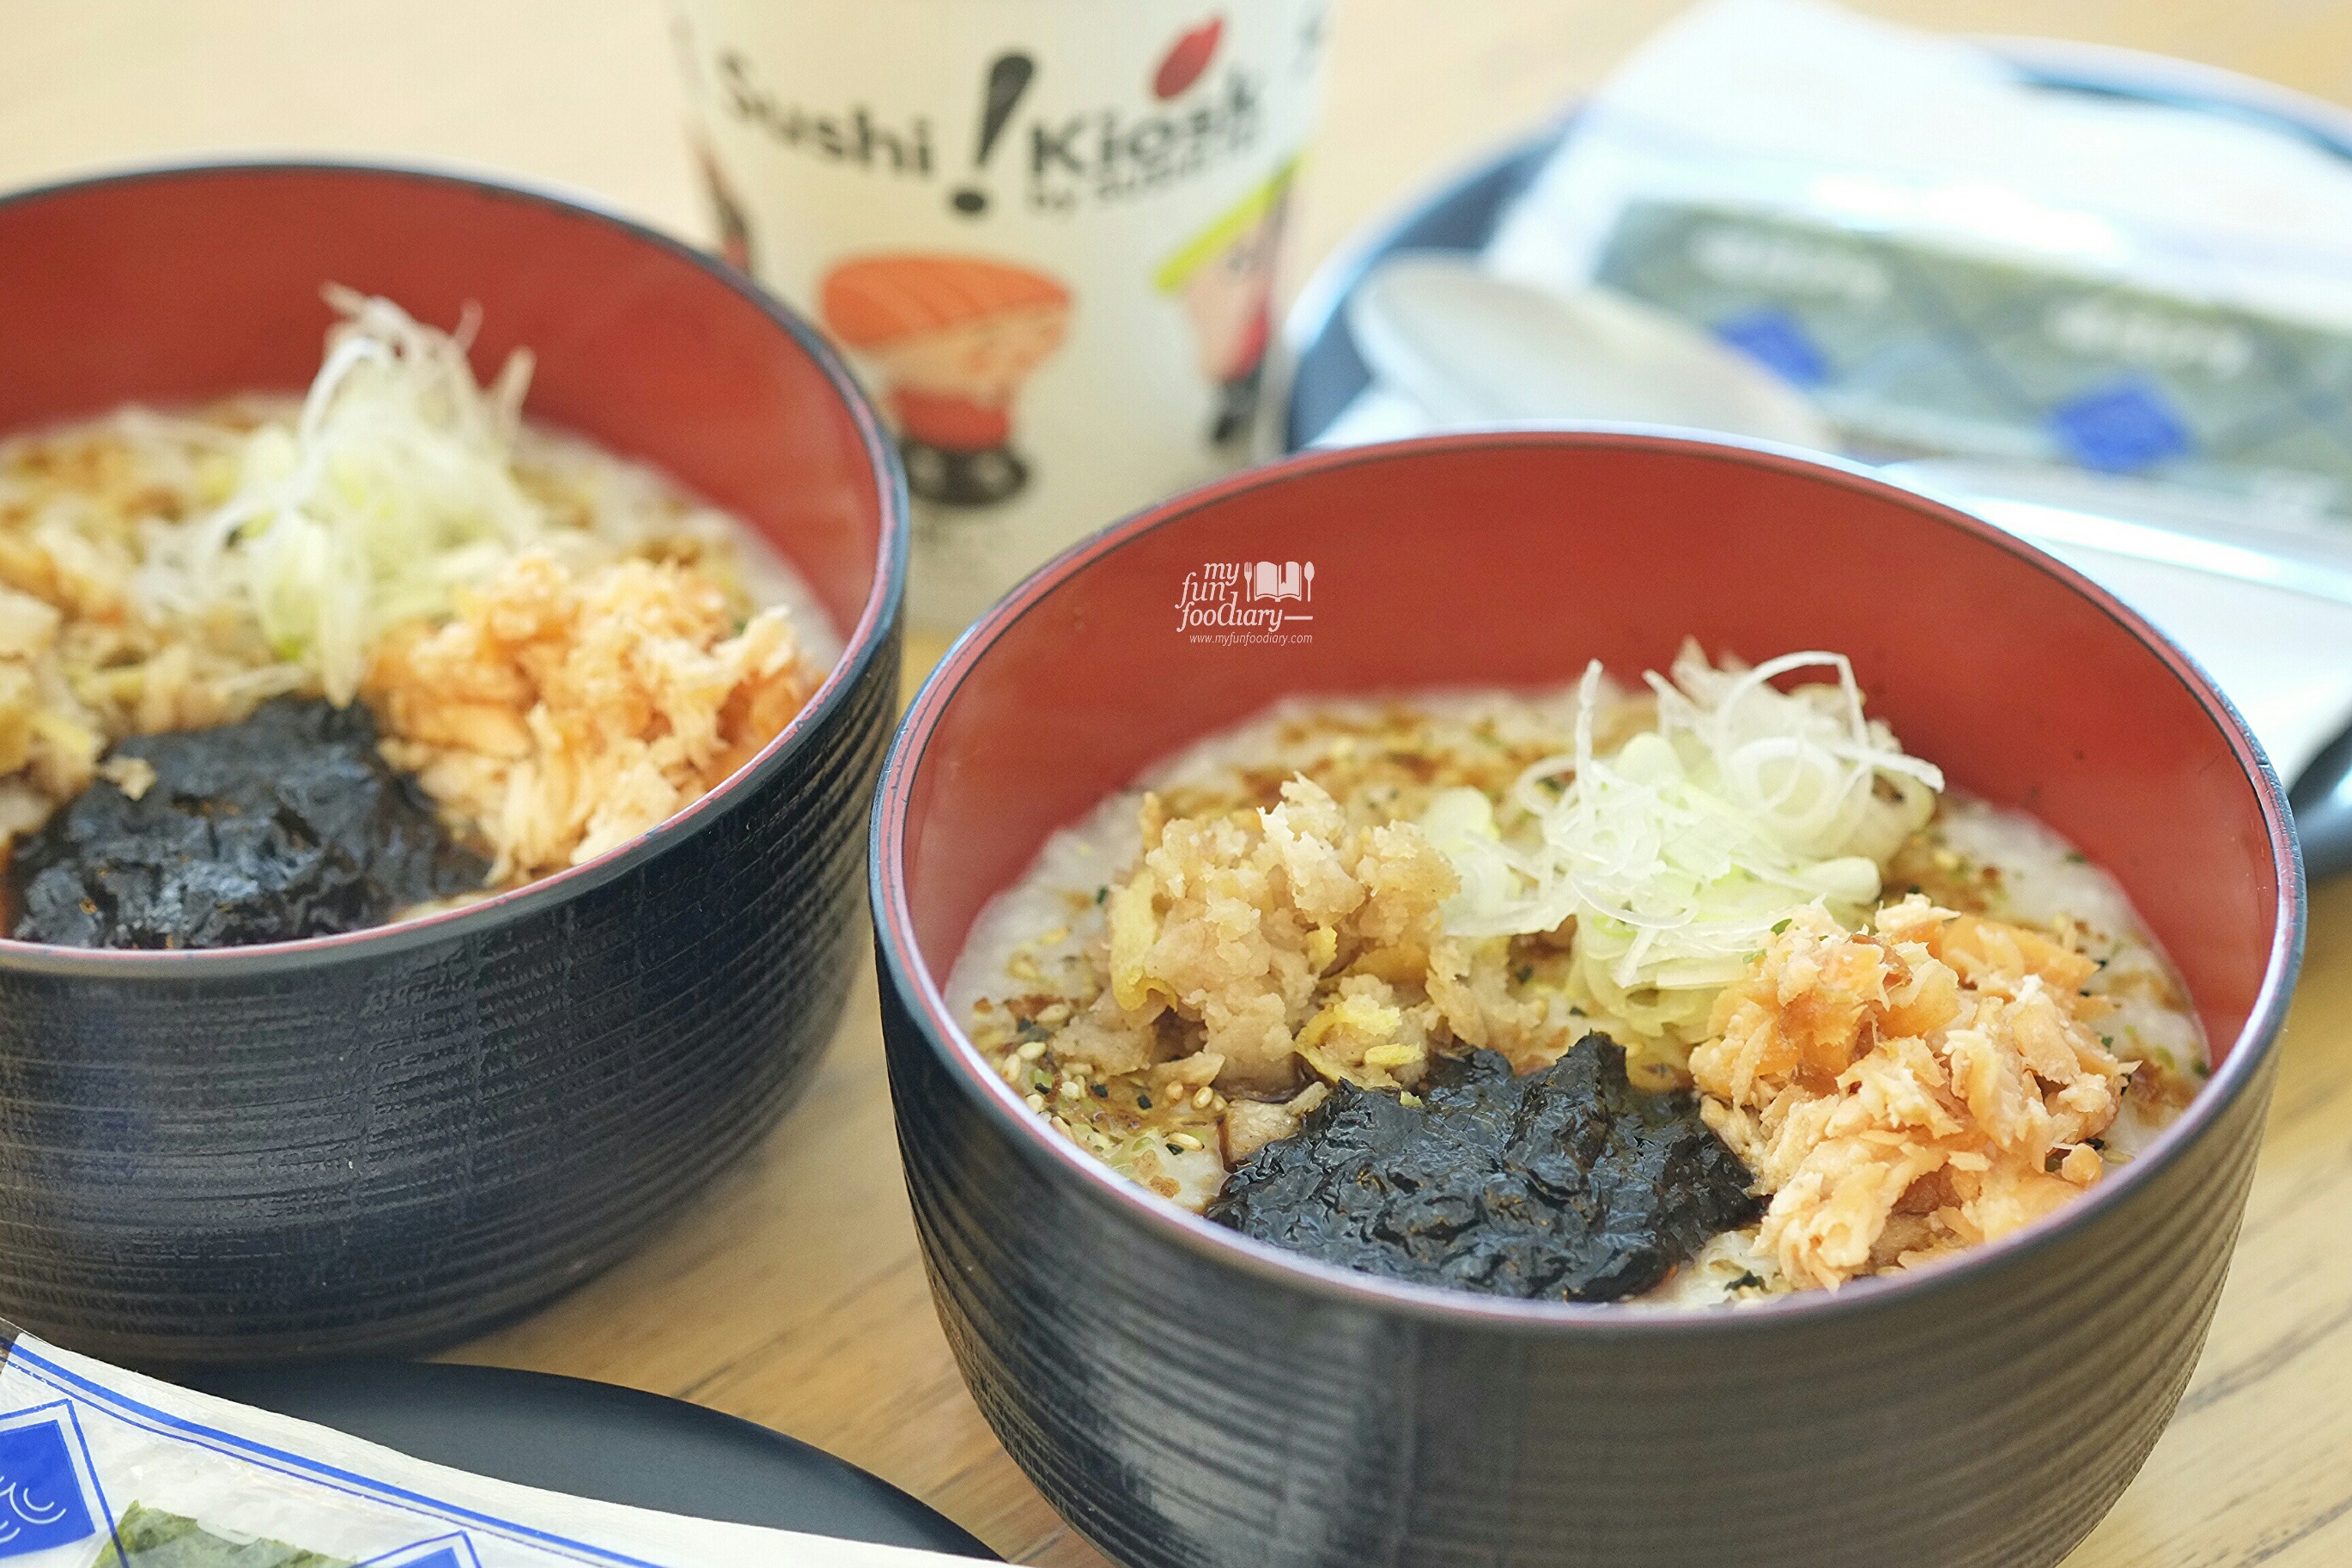 Okayu Salmon Japanese Porridge at Sushi Kiosk by Sushi Tei - by Myfunfoodiary